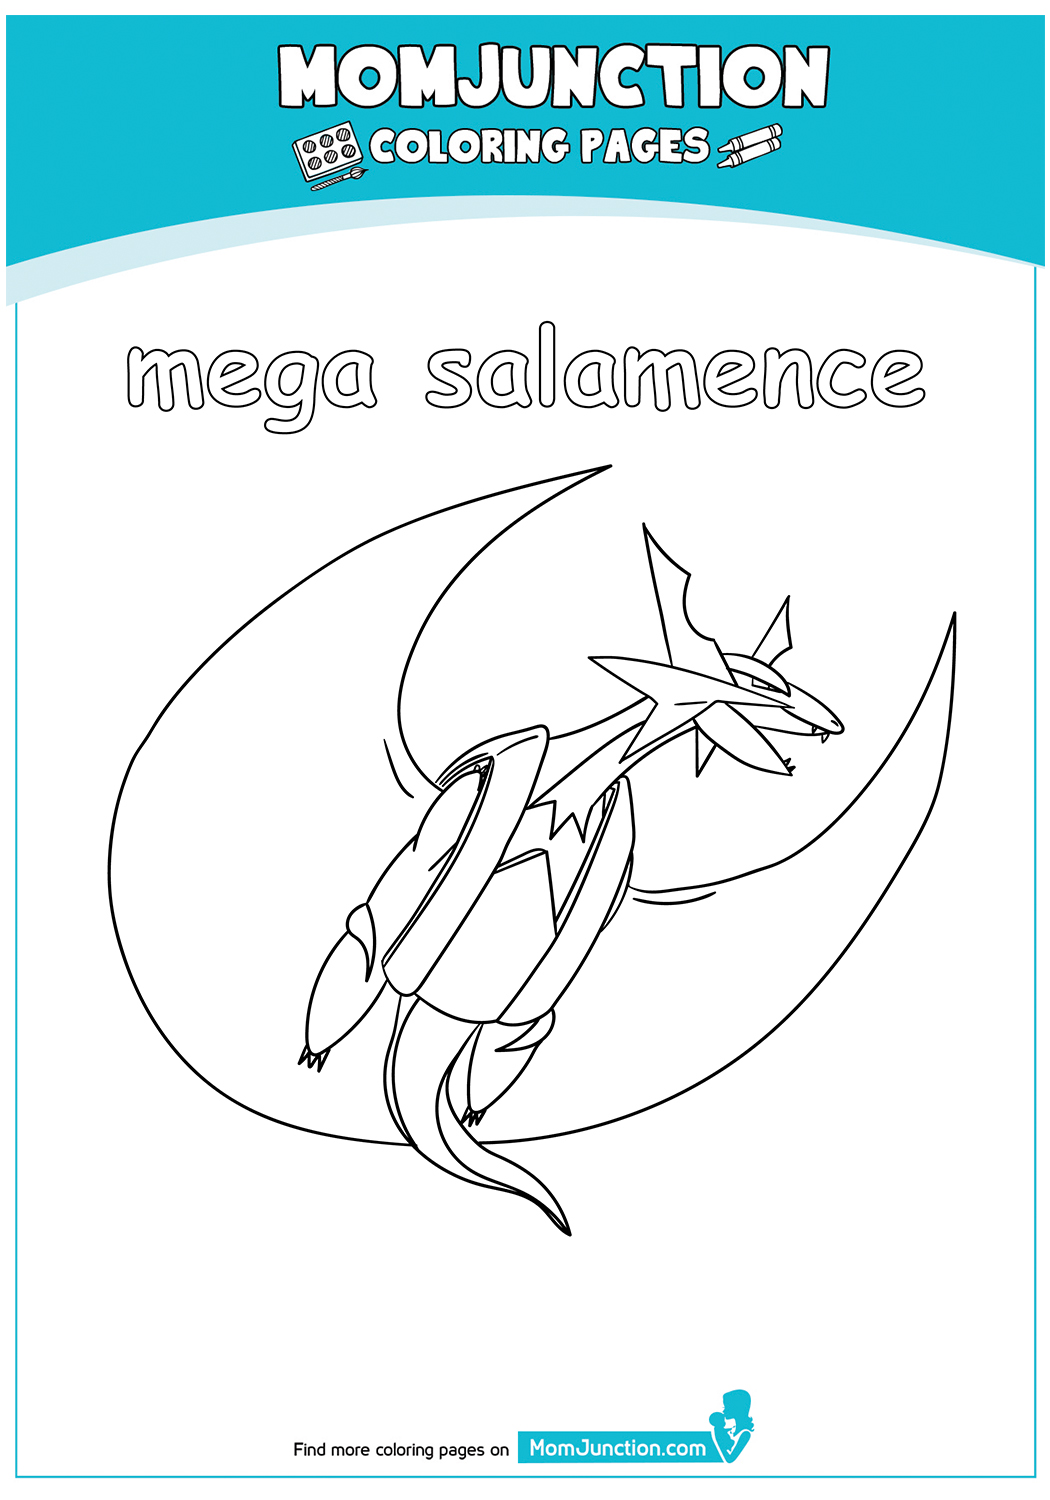 mega-salamence-17